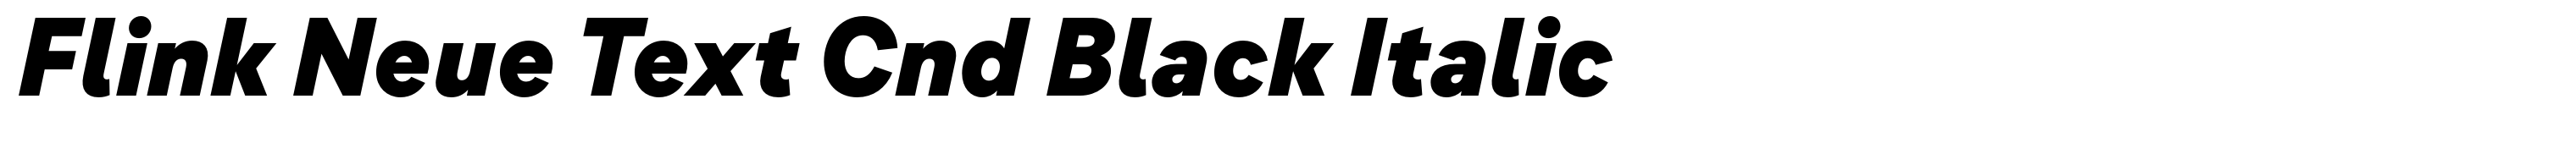 Flink Neue Text Cnd Black Italic